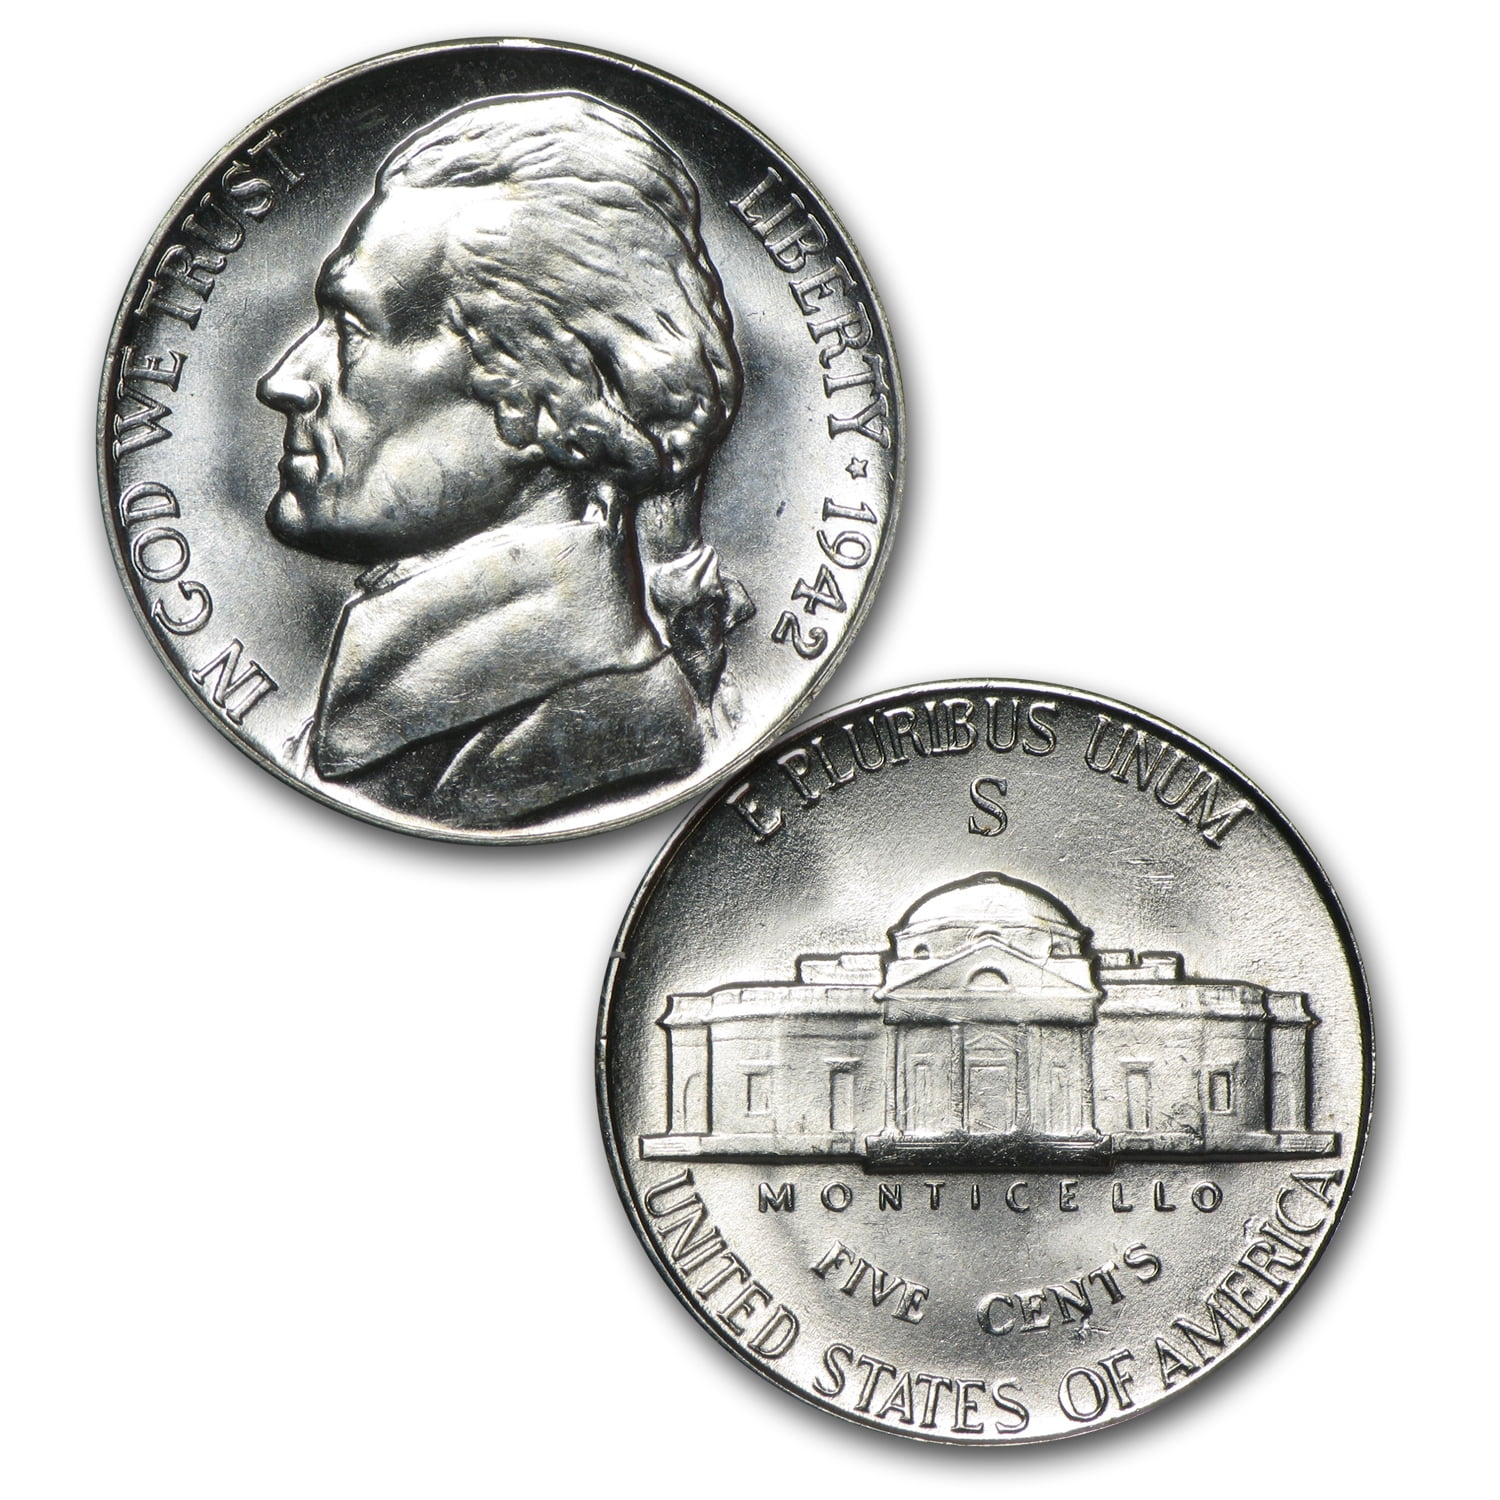 wartime coinage set value